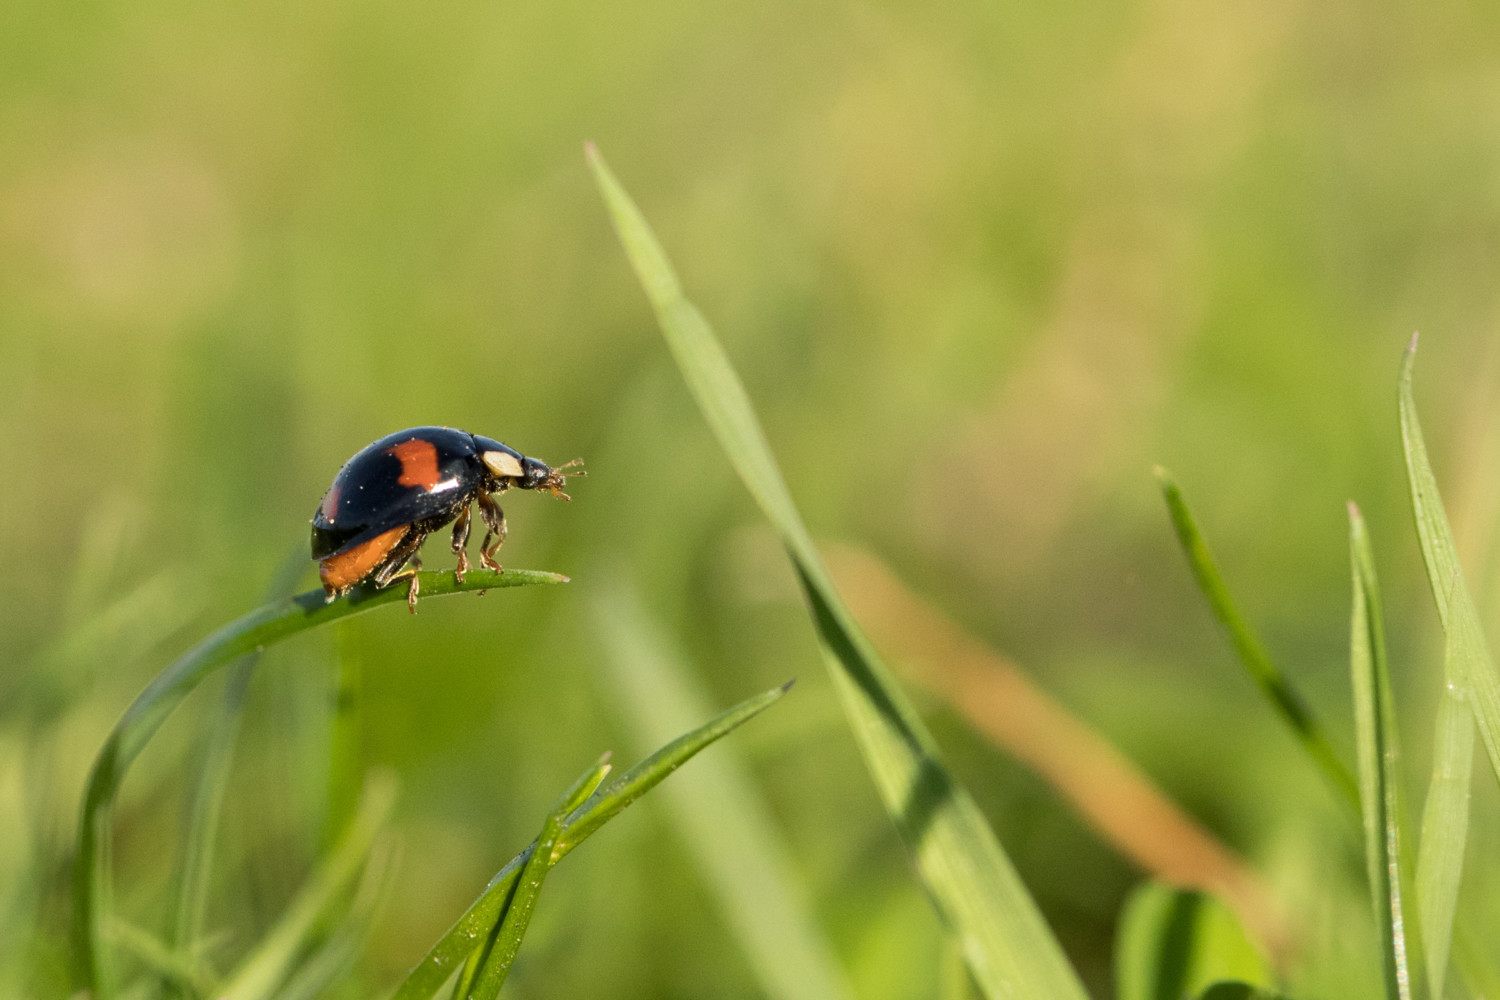 ladybug photo